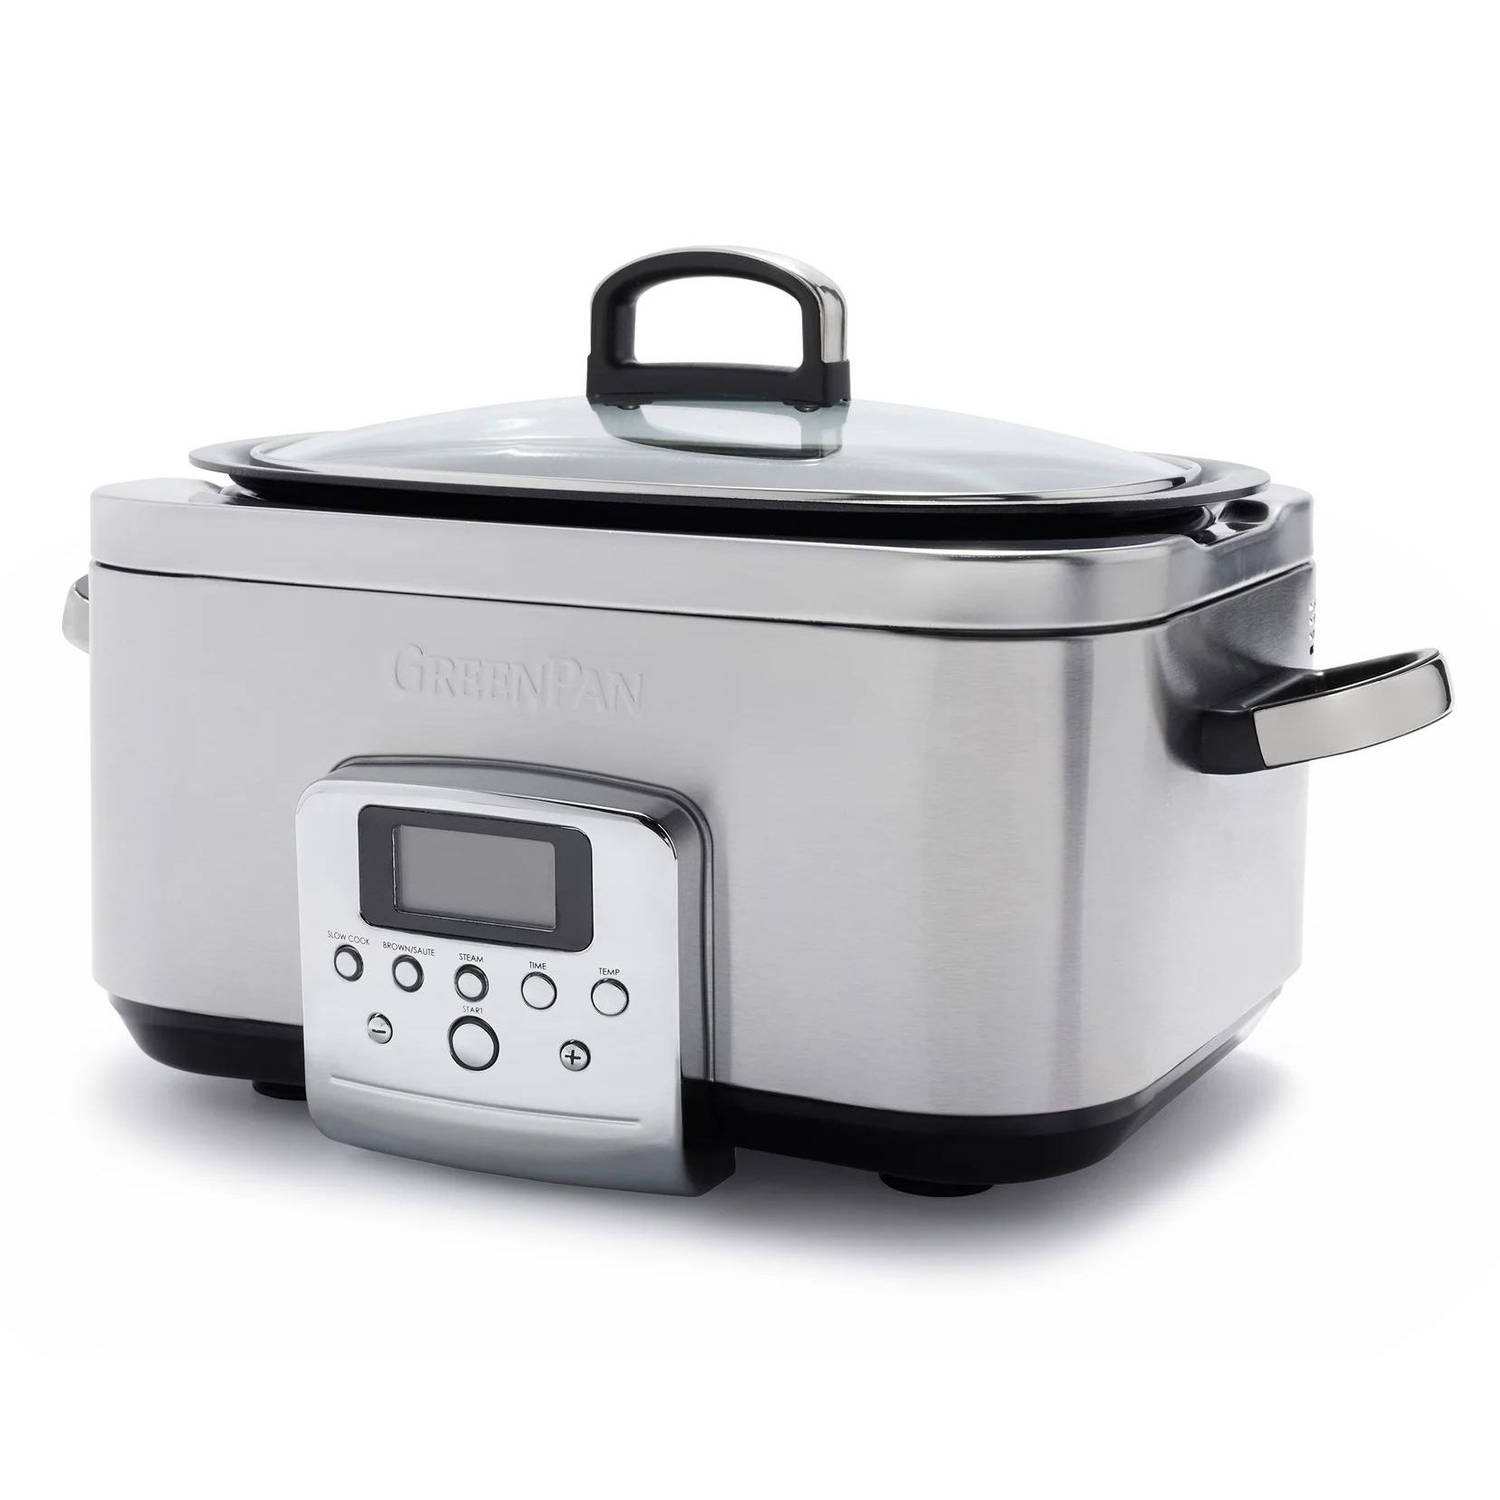 Greenpan Slow cooker stainless steel 6 liter